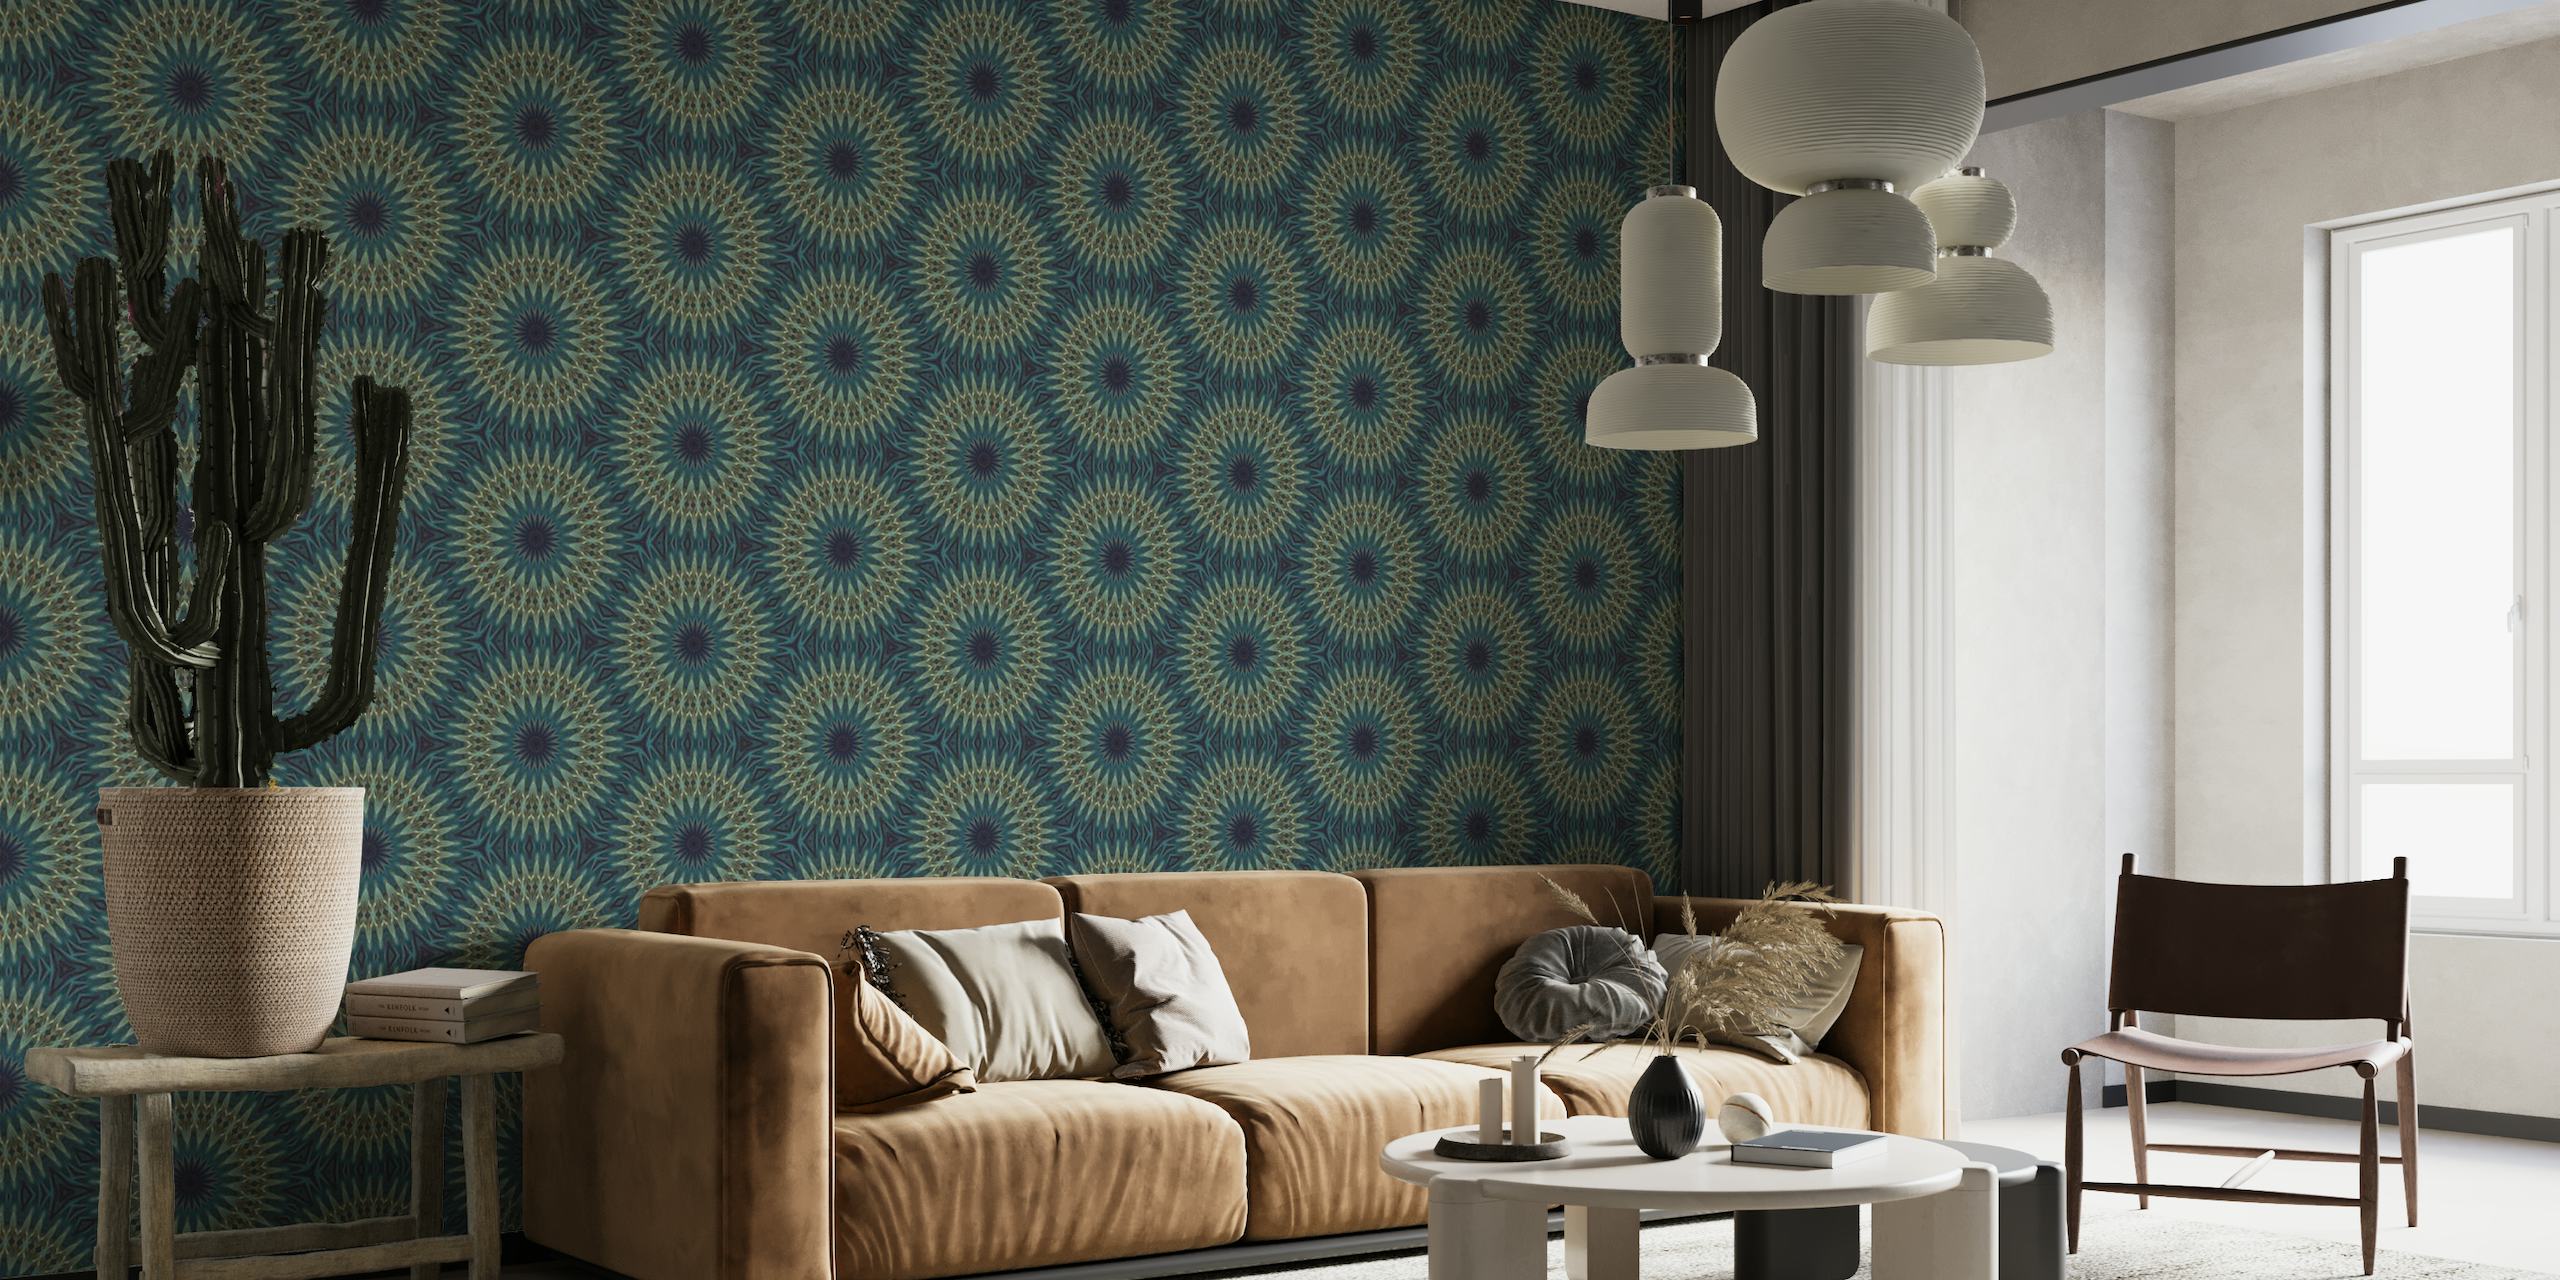 Oriental Inpired Round Tiles Mediterranean Pattern Teal And Gold wallpaper